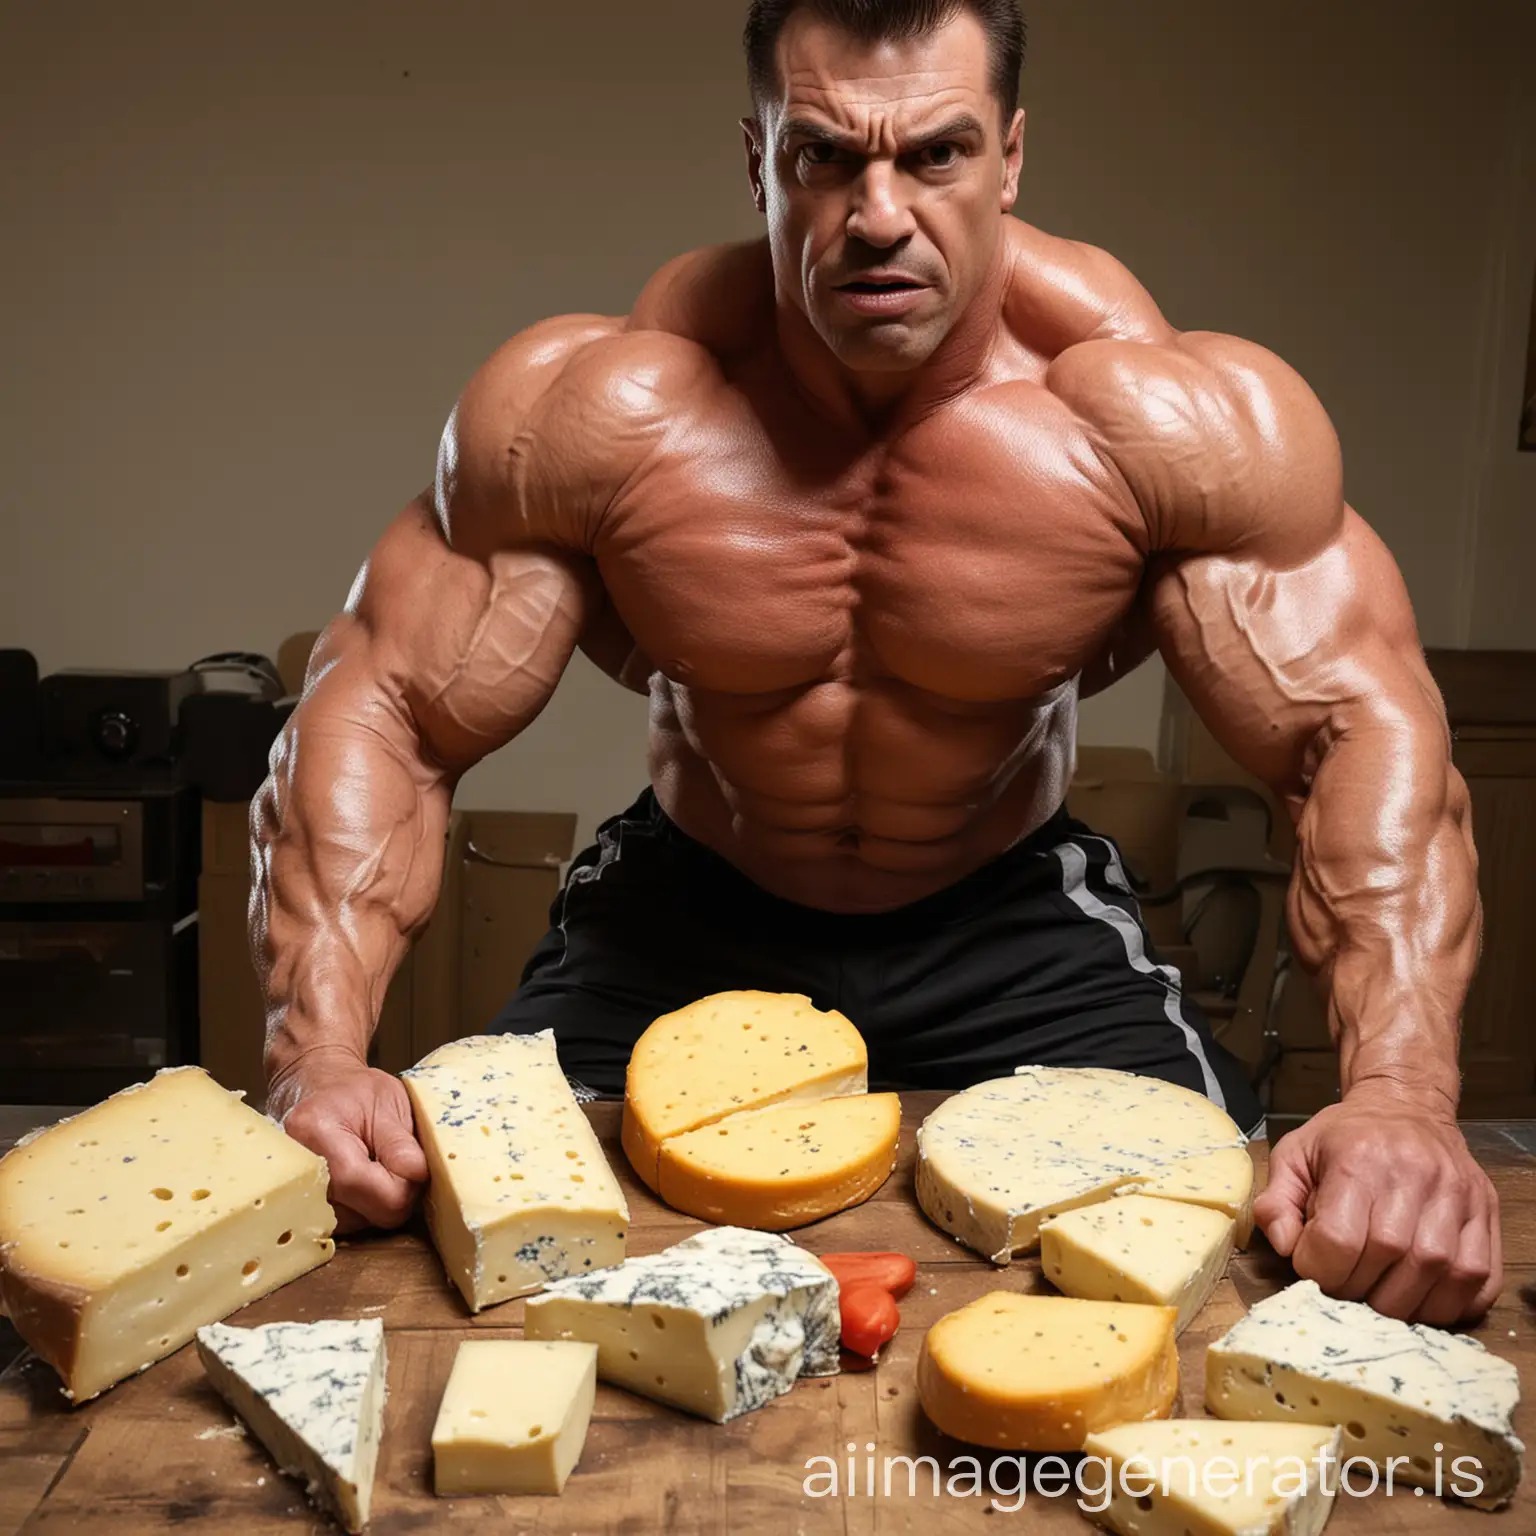 Intense-Muscle-Daddy-Bodybuilder-Feeding-Cheese